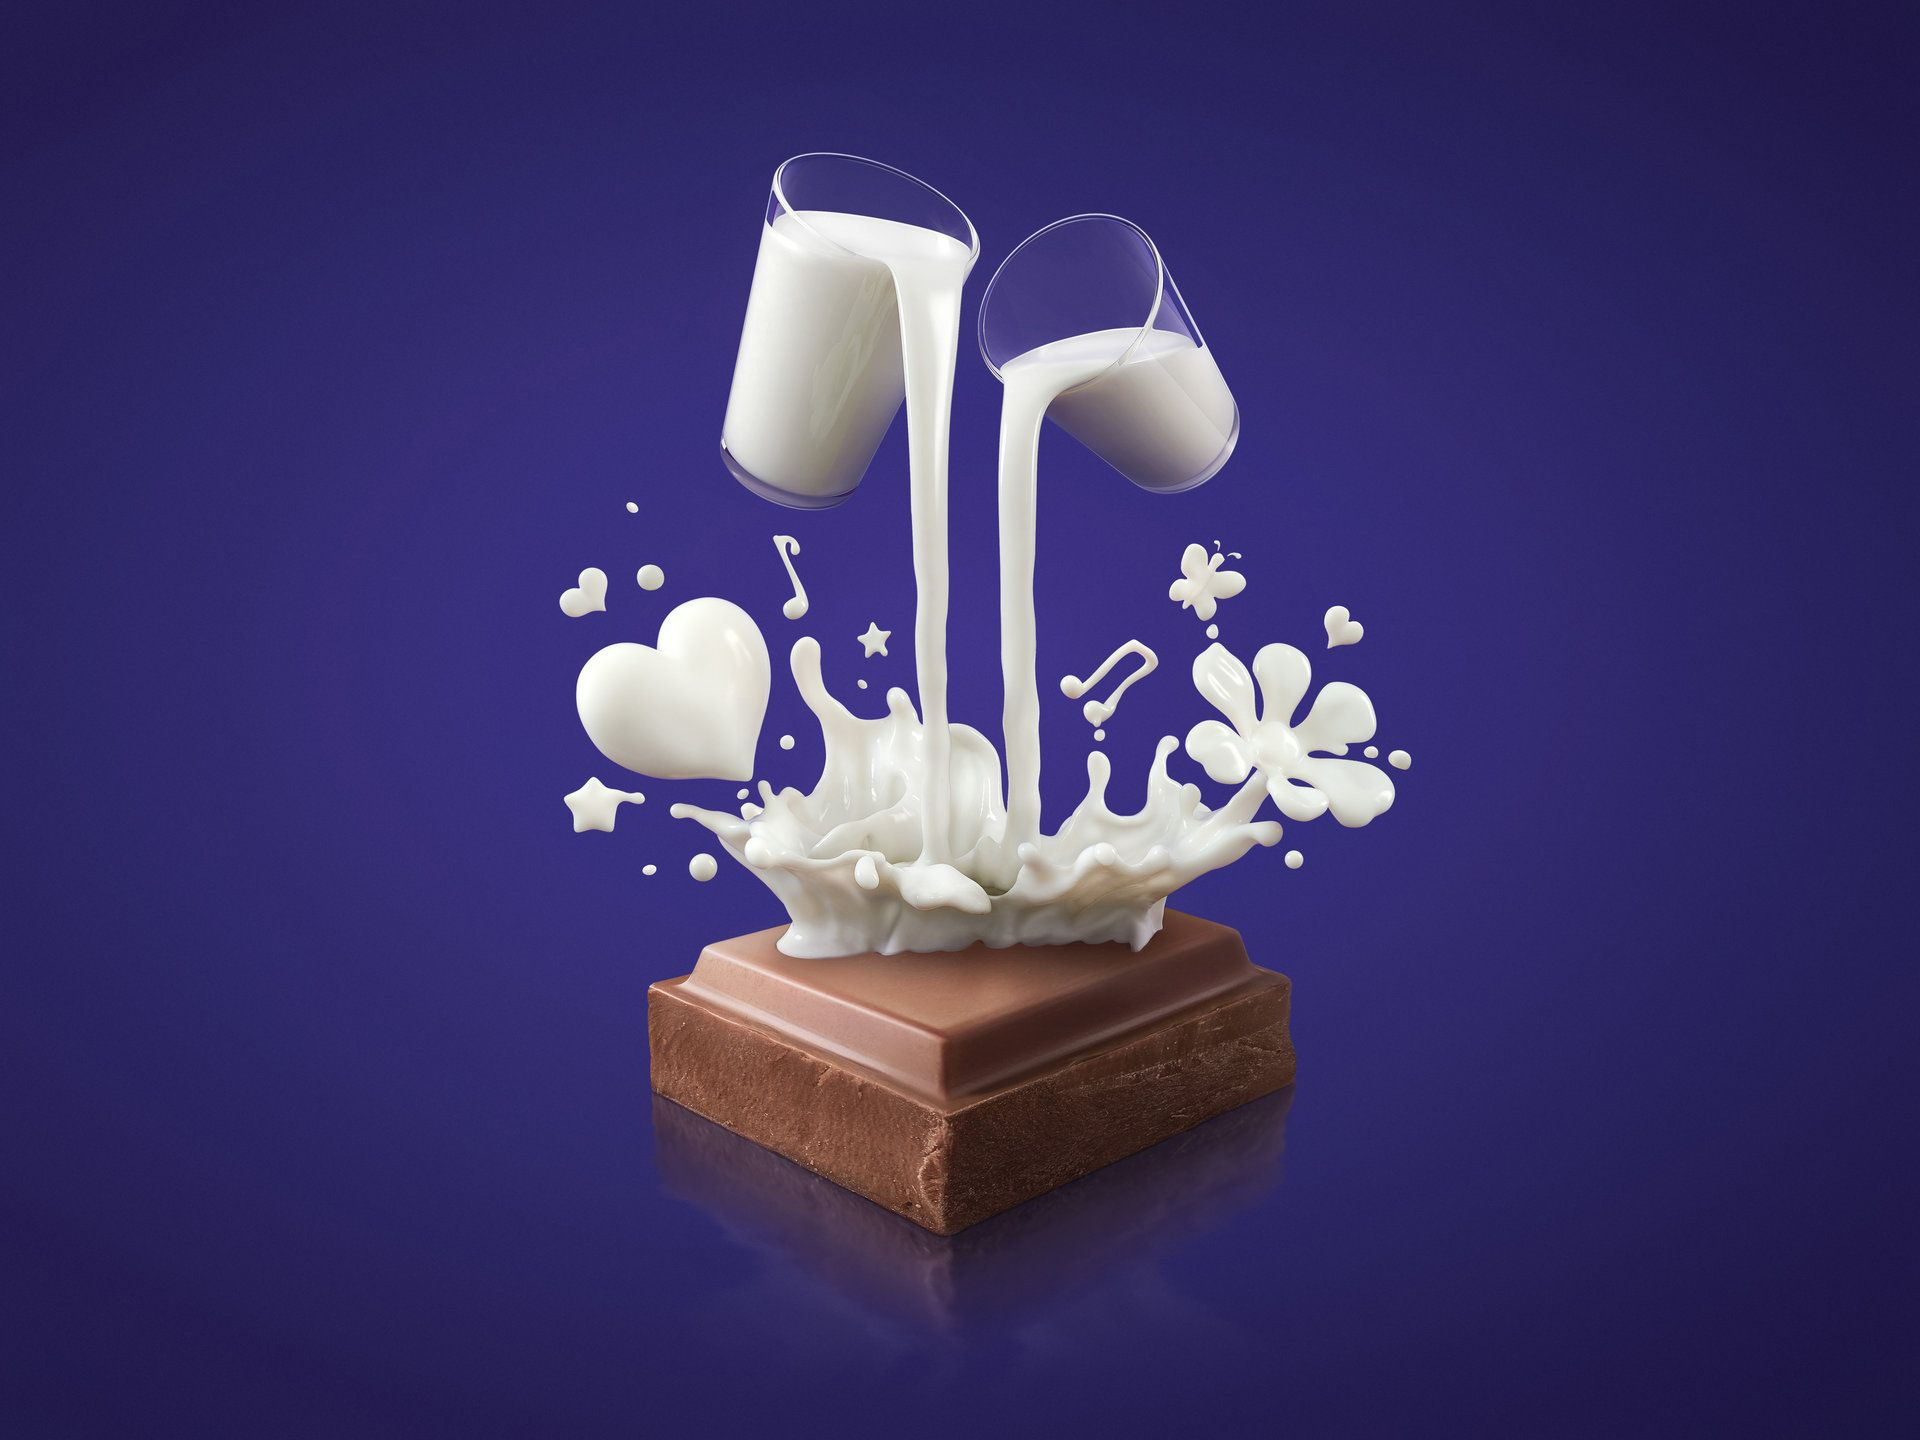 Cadbury's Dairy Milk - Chocolate Wallpaper (42640750) - Fanpop